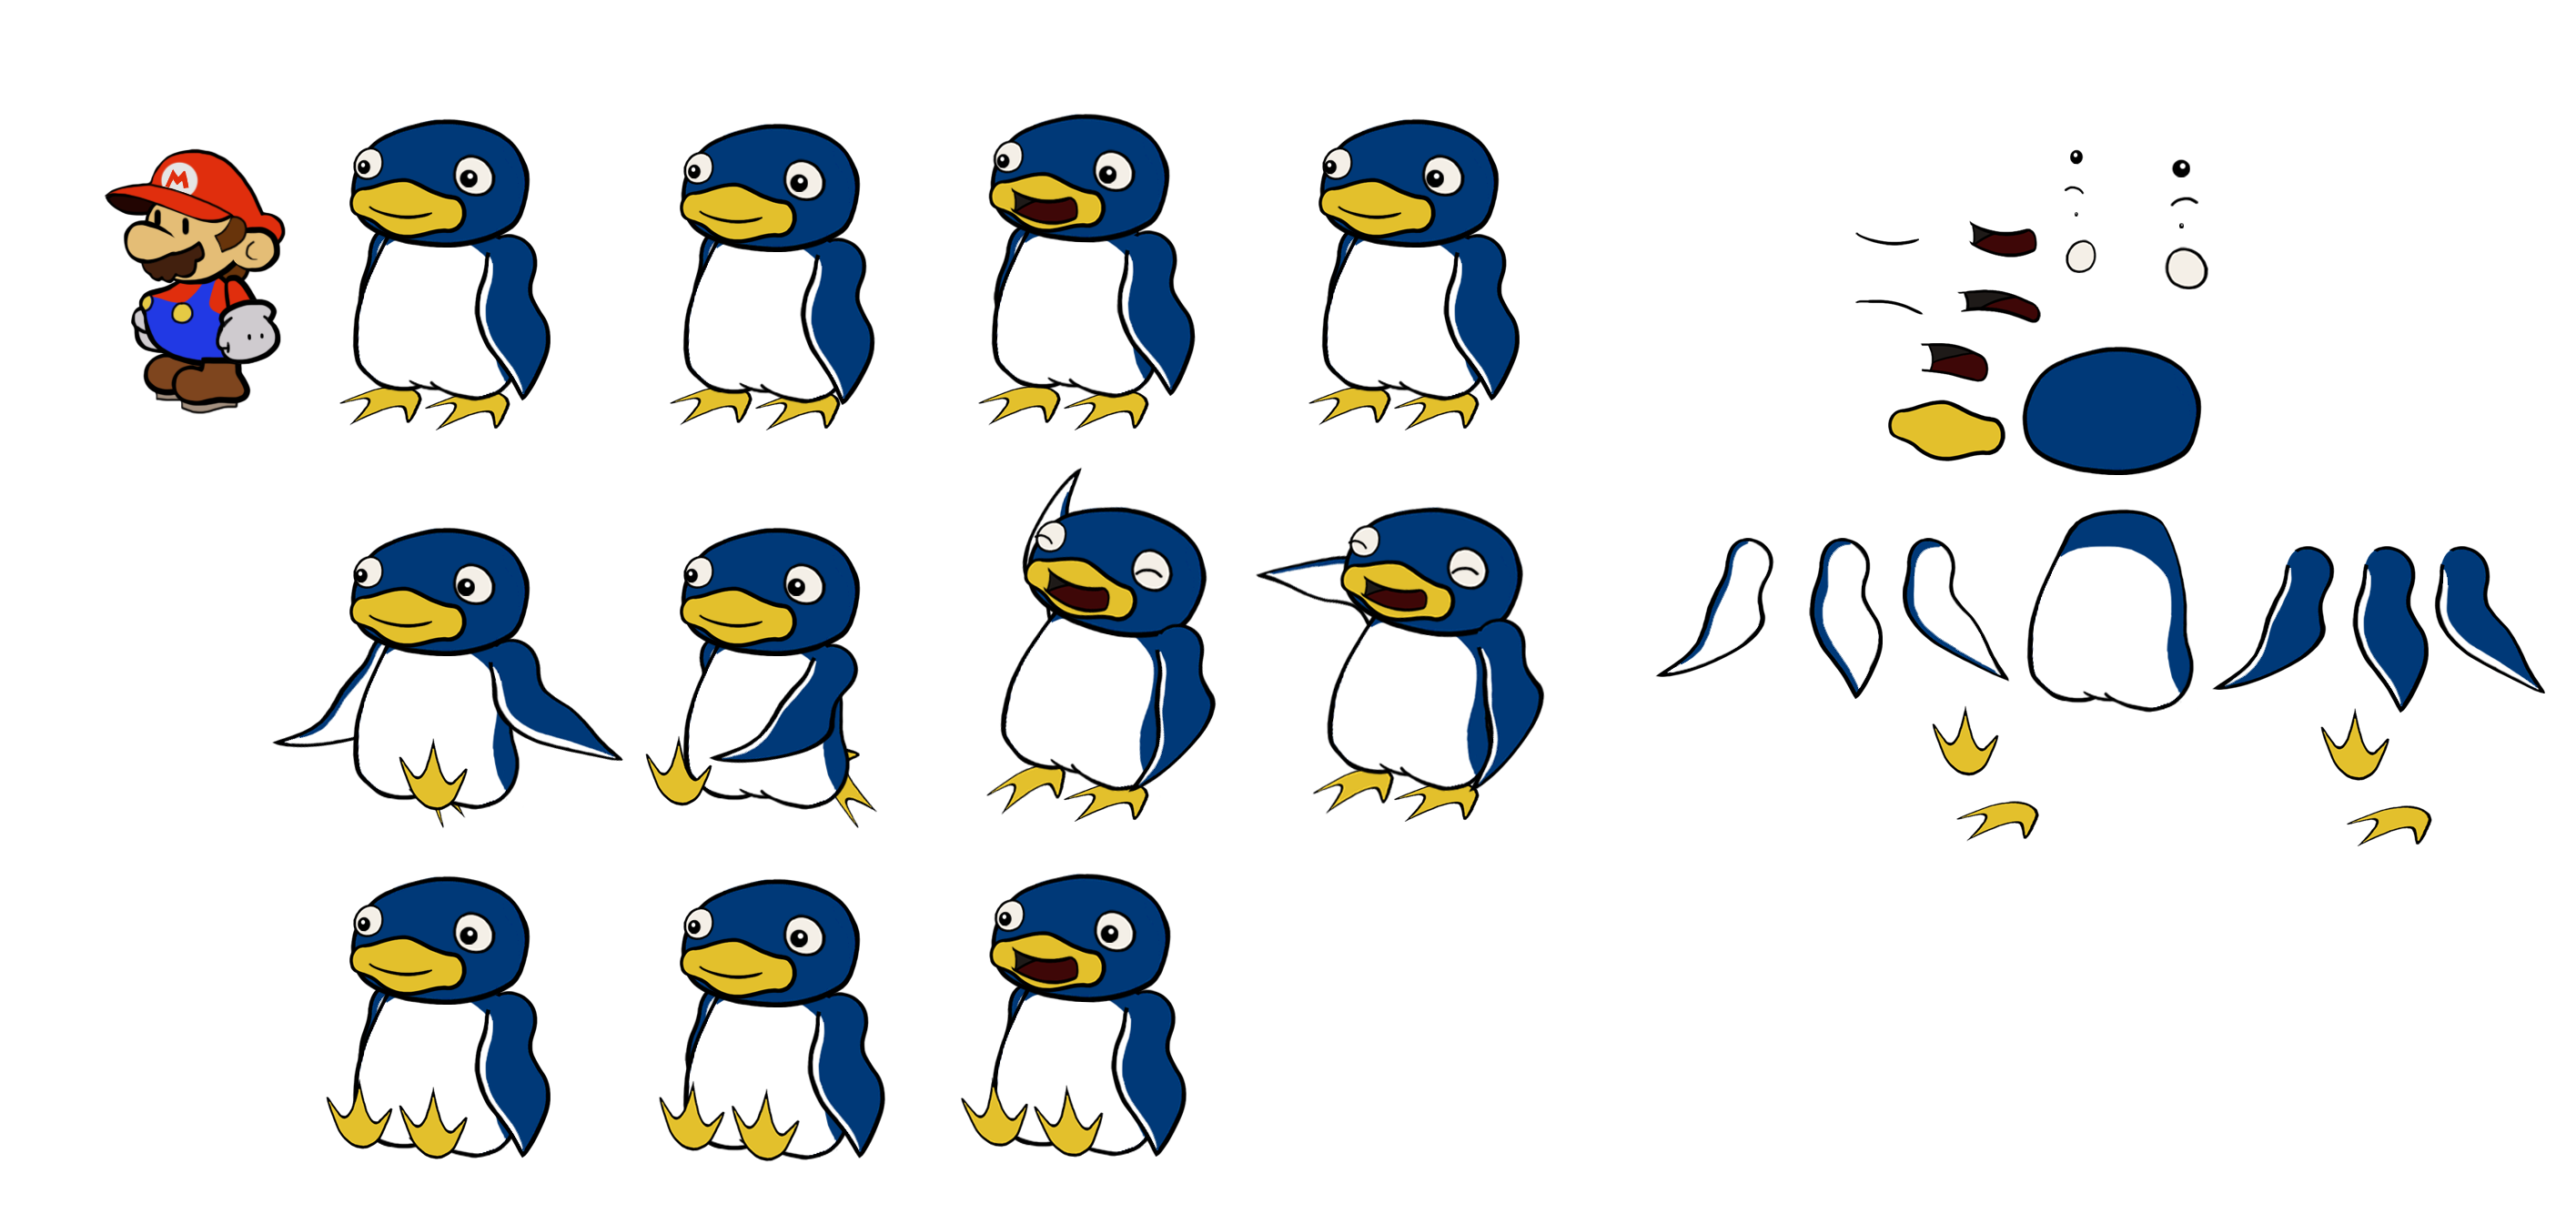 Penguins (Paper Mario-Style)